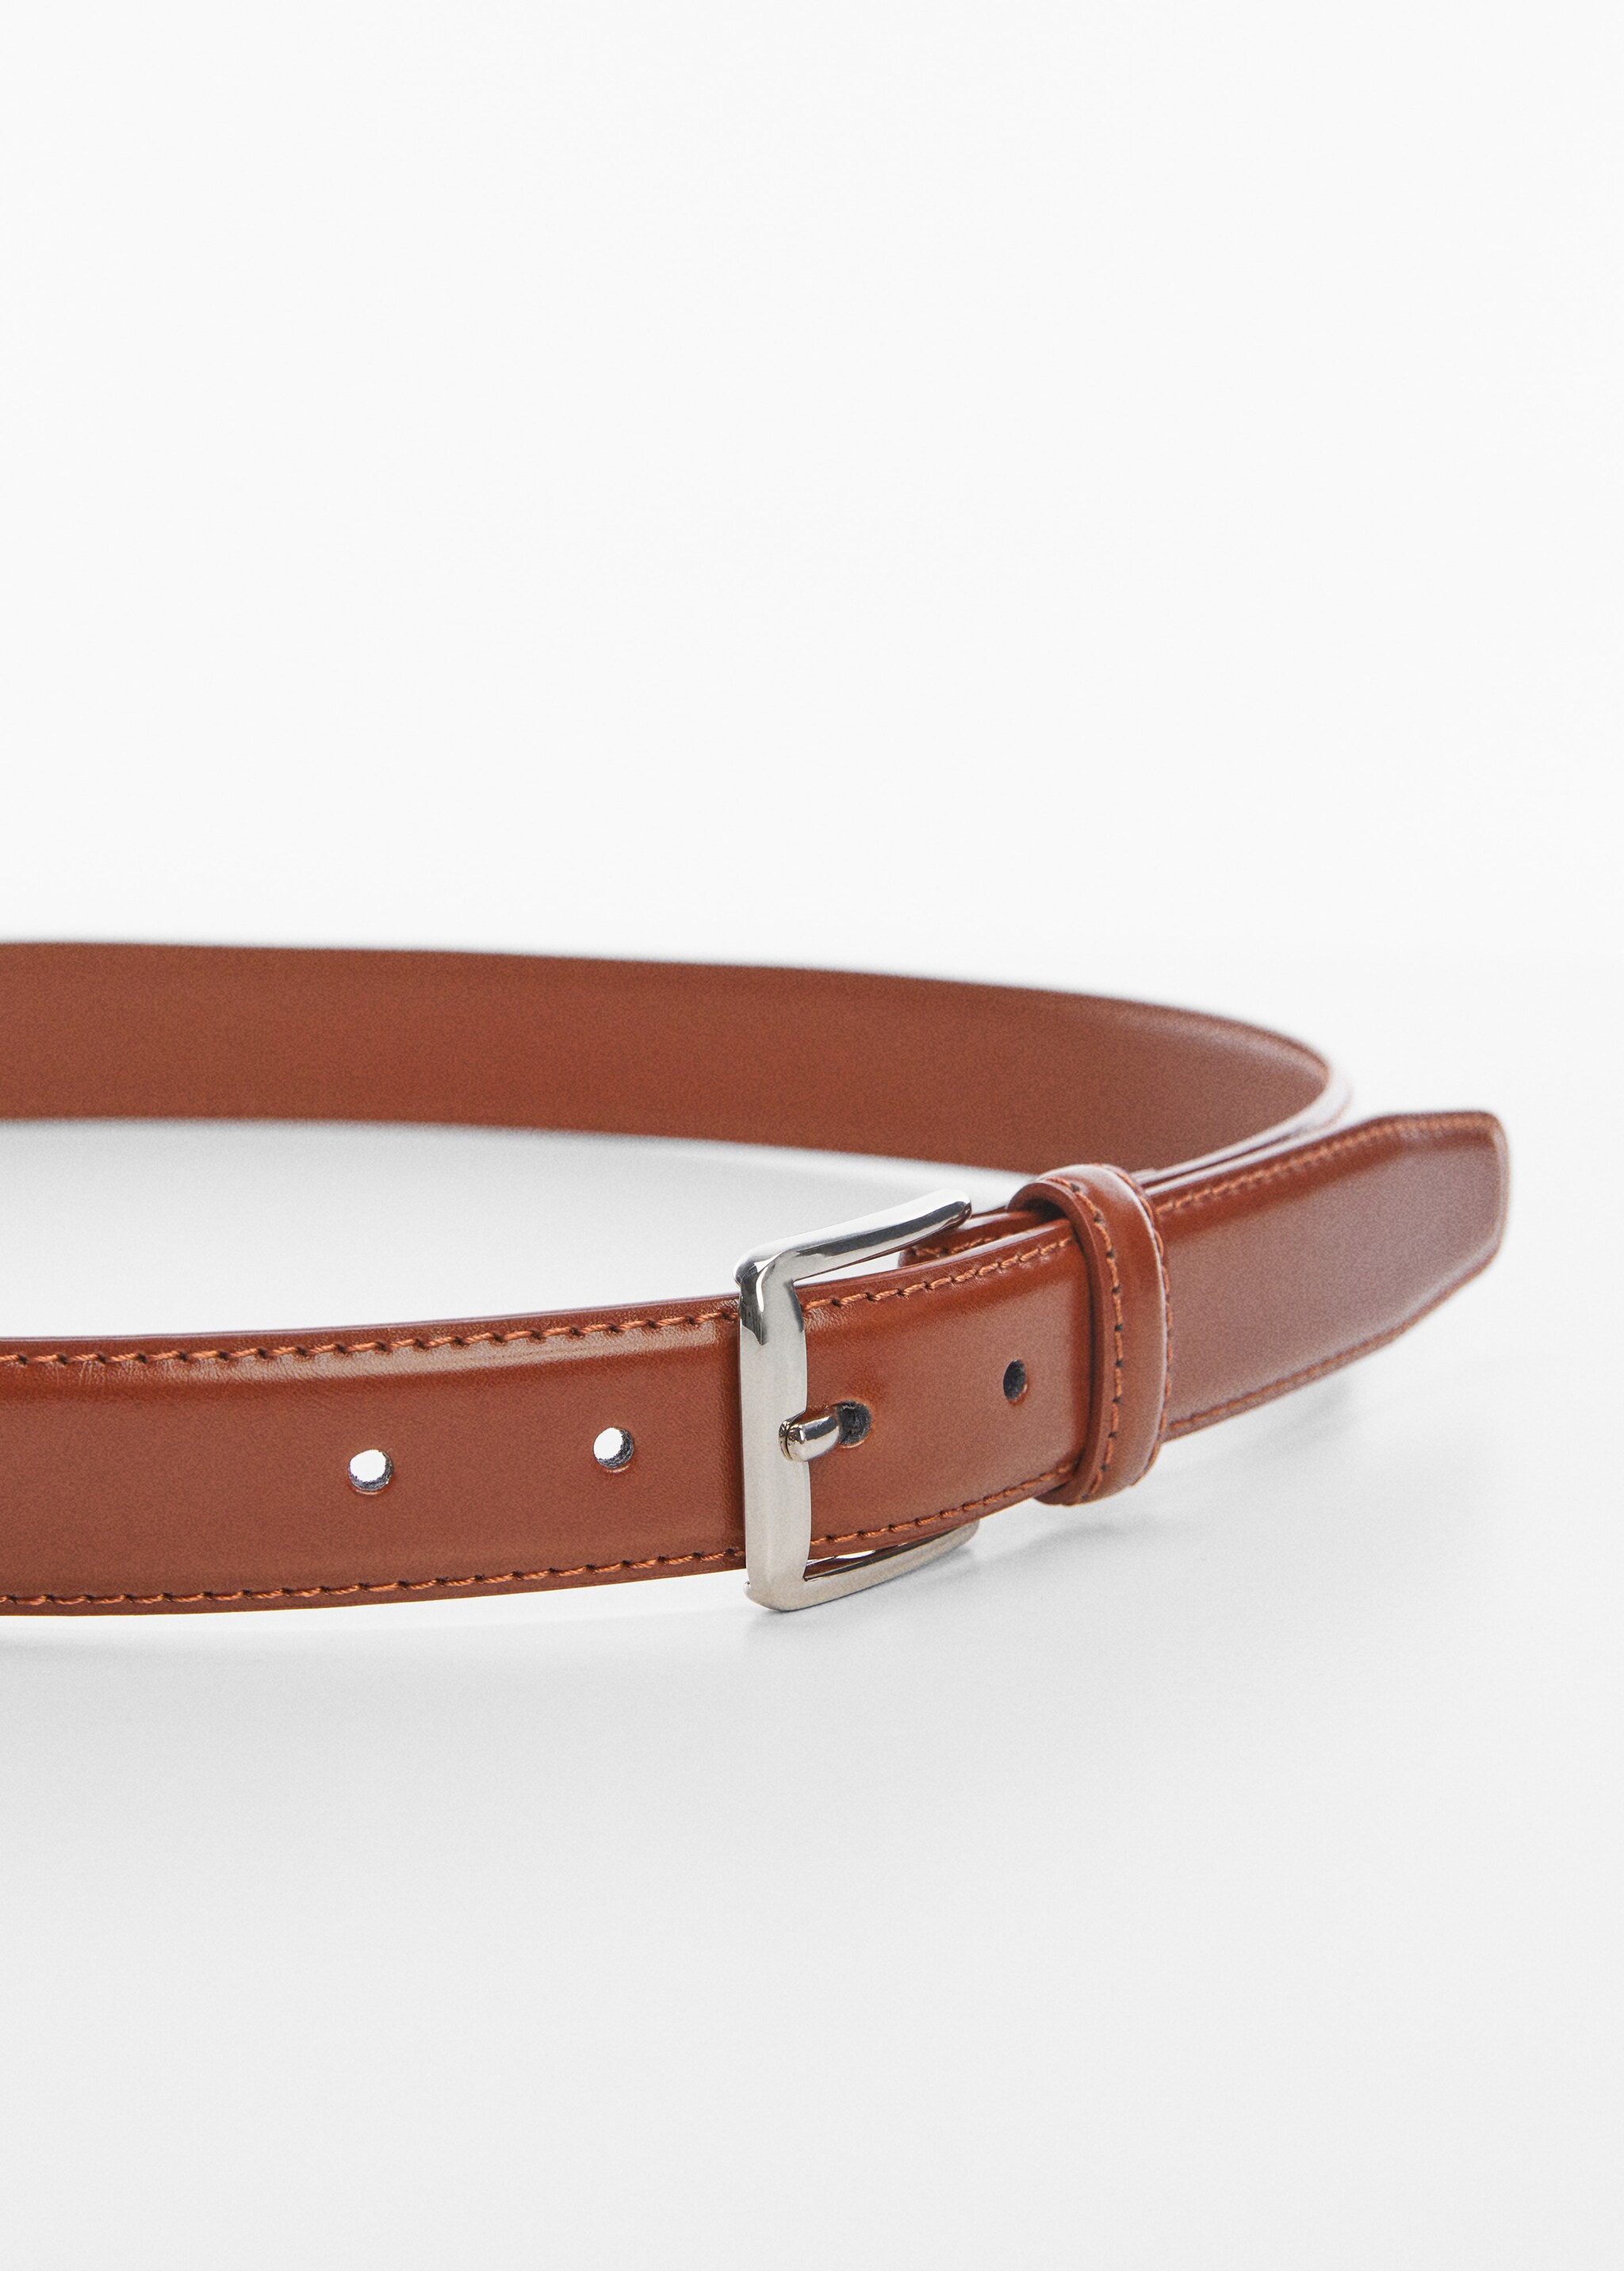 Leather belt - Medium plane